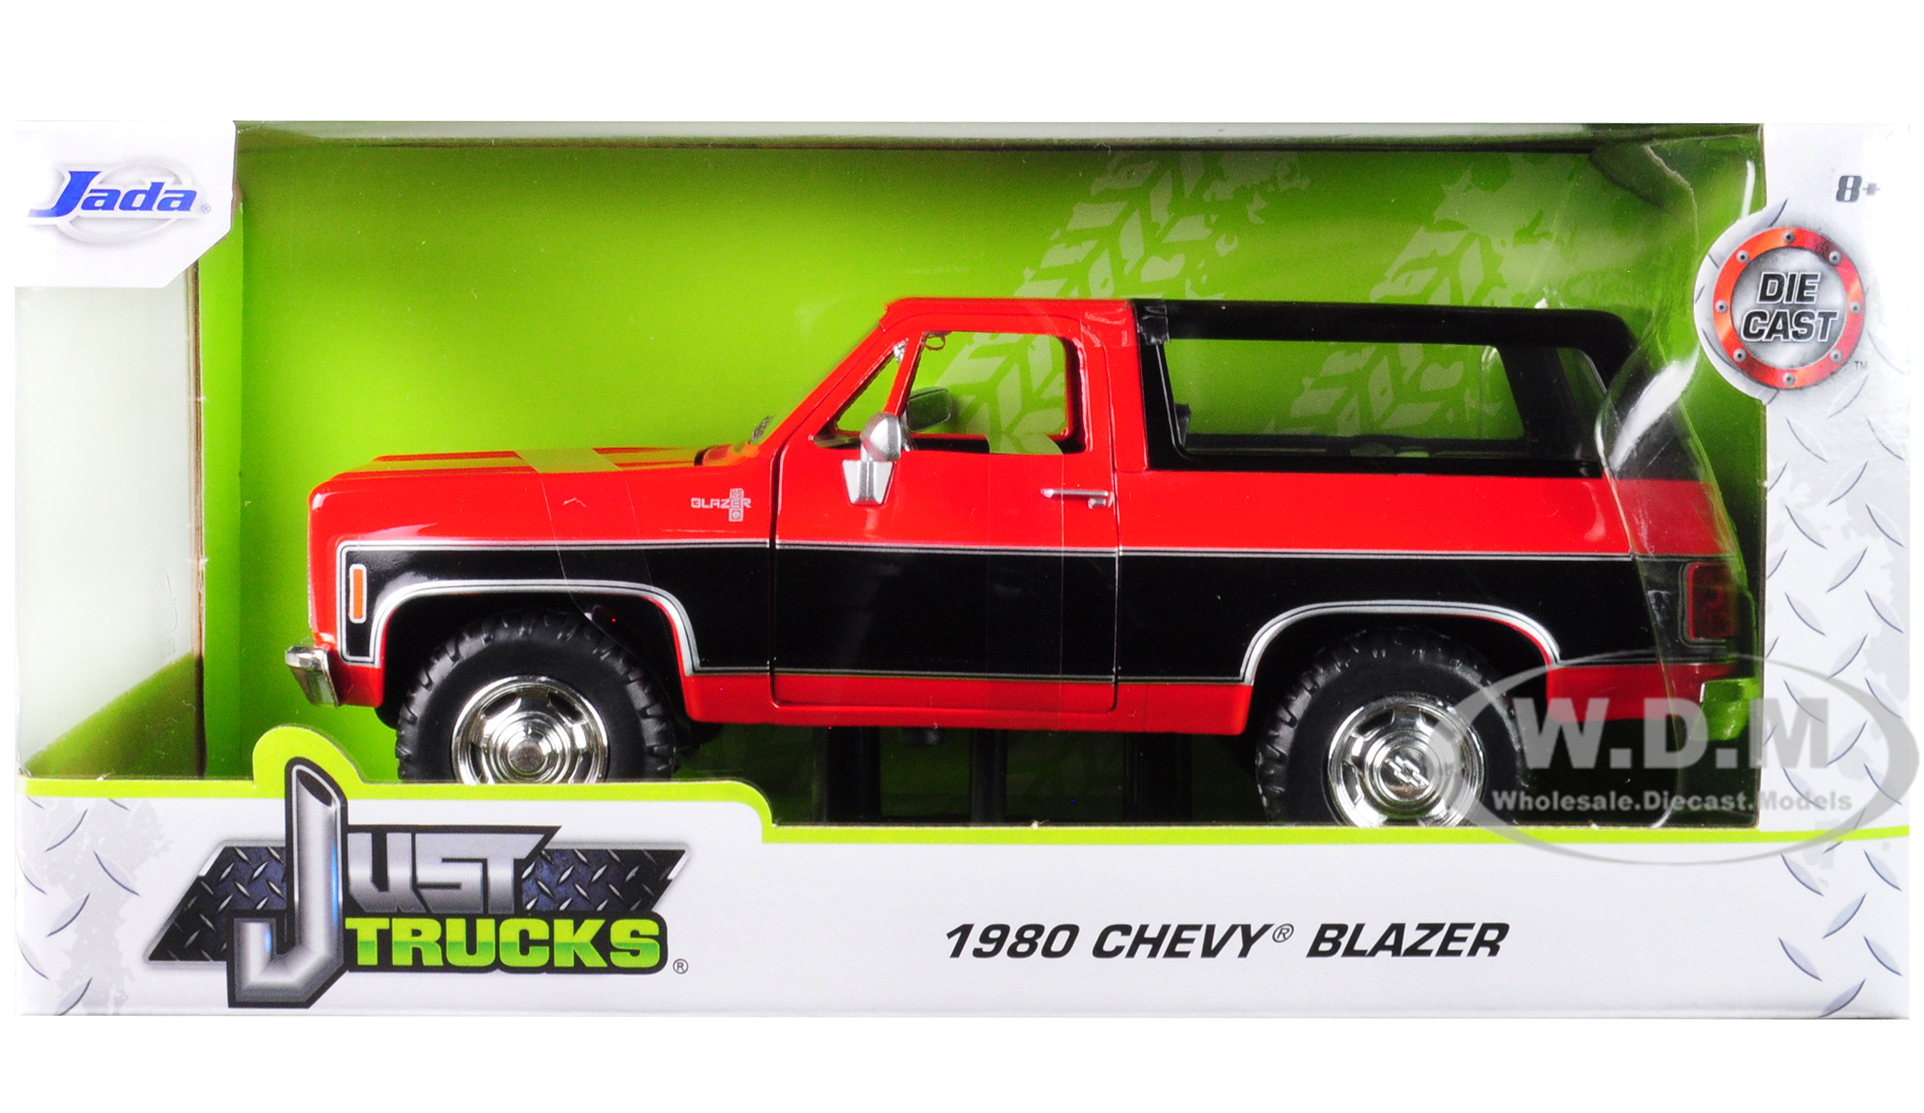 1980 Chevrolet Blazer K5 Red and Black "Just Trucks" 1/24 Diecast Model Car by Jada